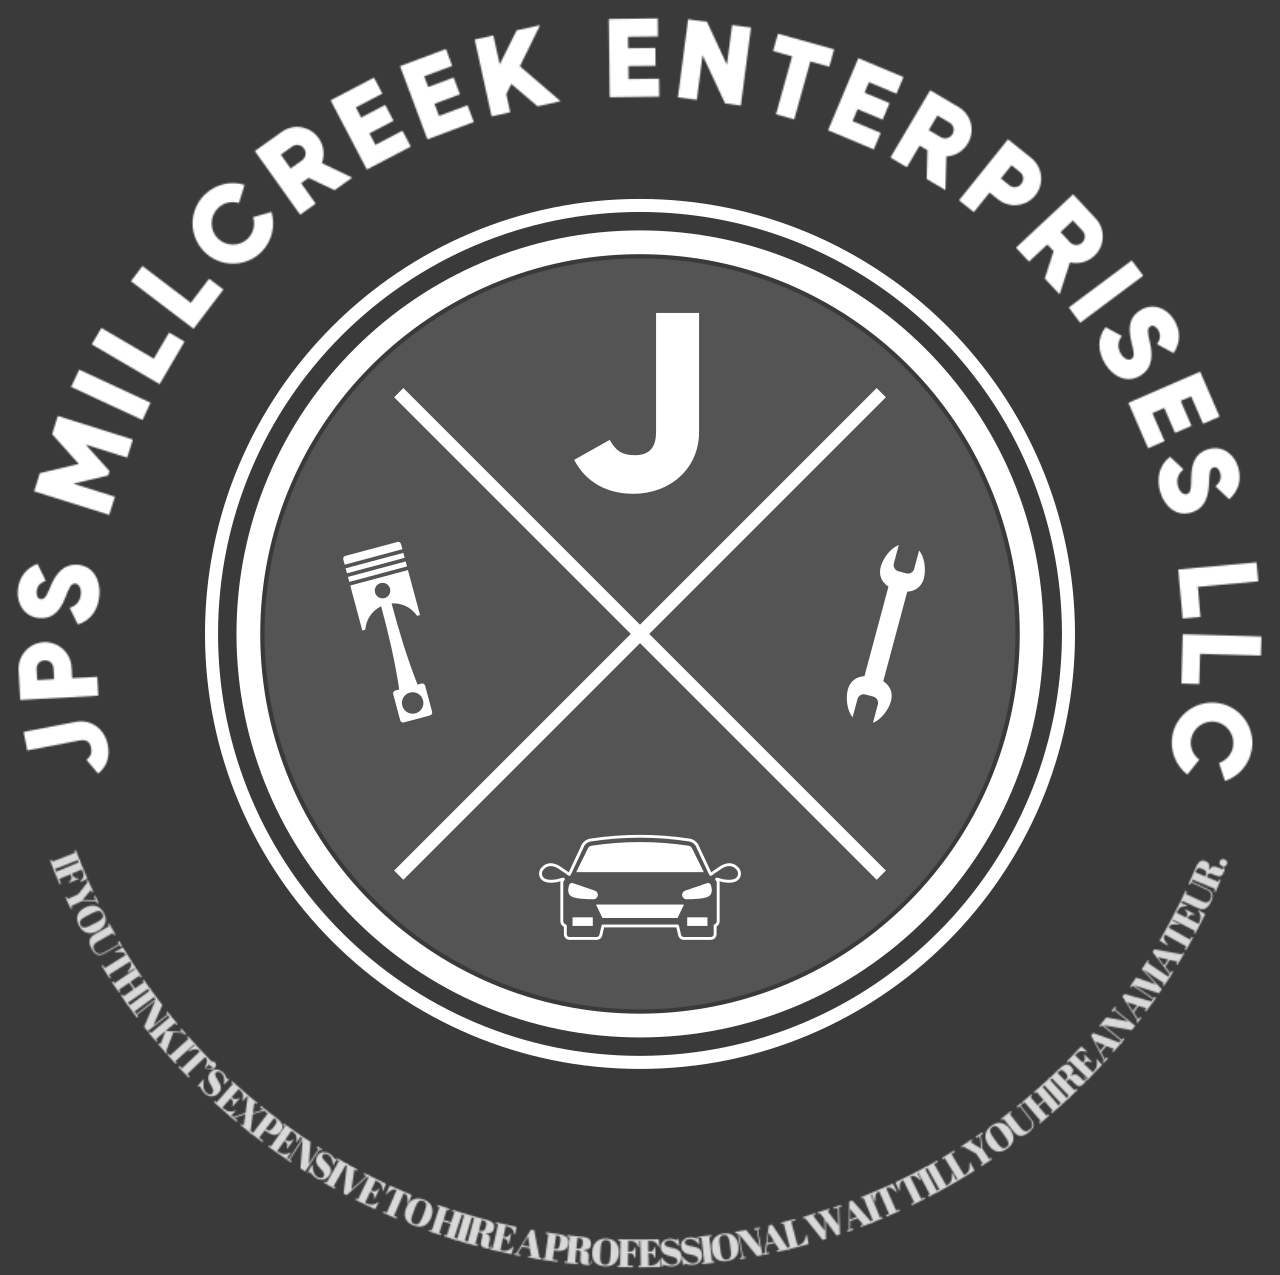 JPS MILLCREEK ENTERPRISES LLC's logo